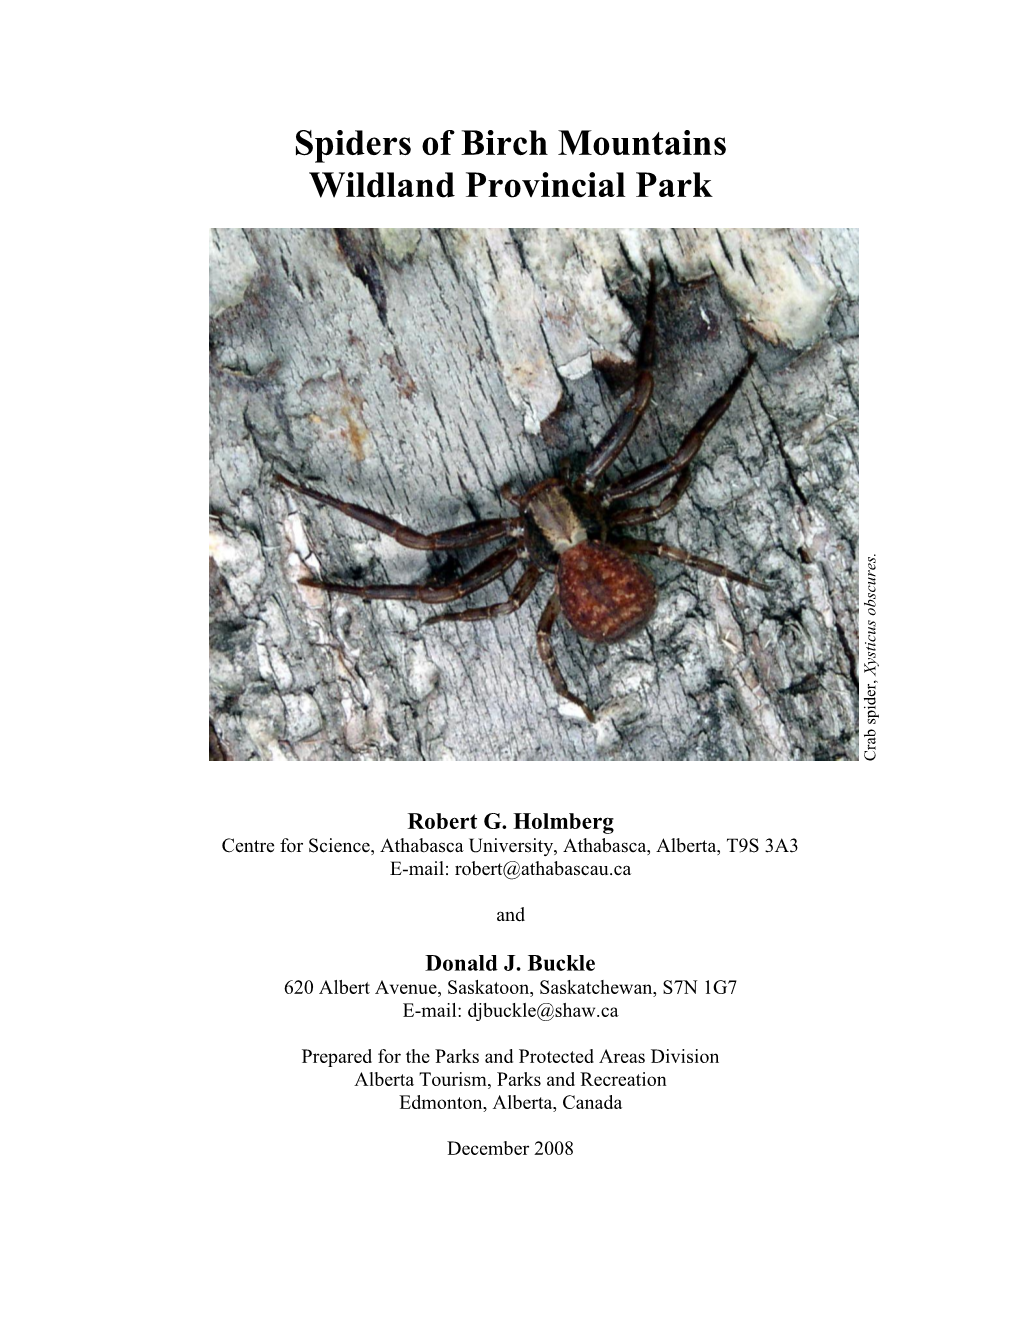 Spiders of Birch Mountains Wildland Provincial Park